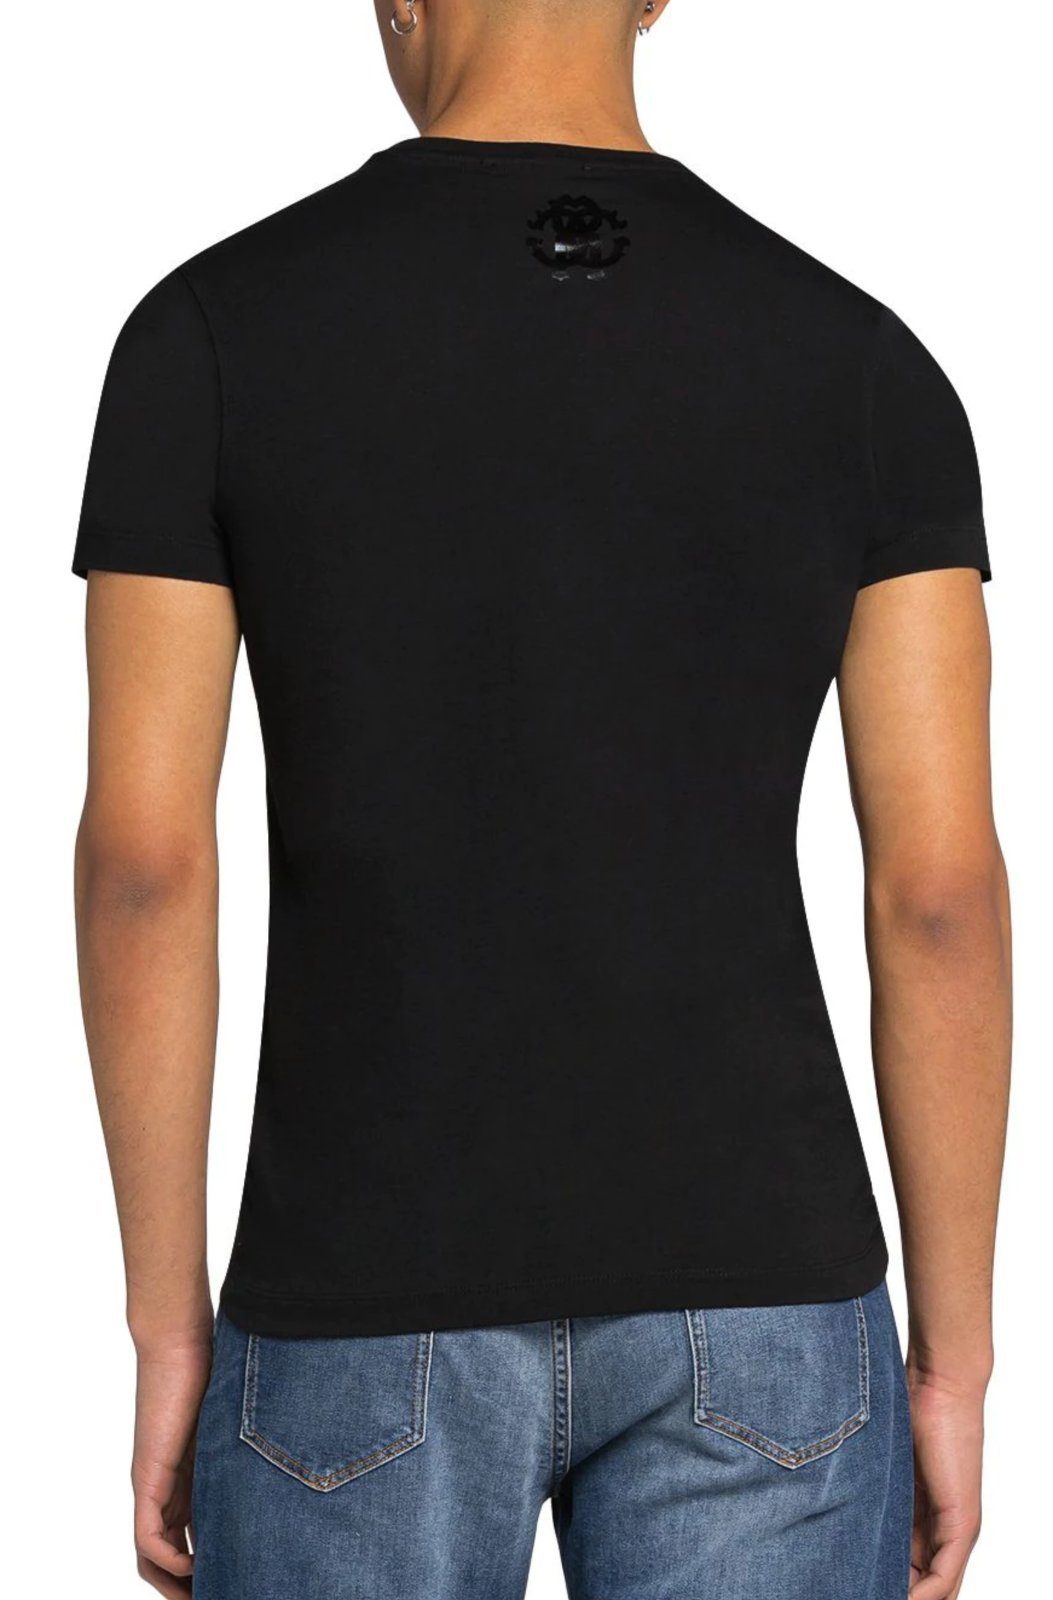 LUXURY cavalli MONOGRAM BLACK roberto T-SHIRT Print-Shirt FIRENZE LOGO PRINT